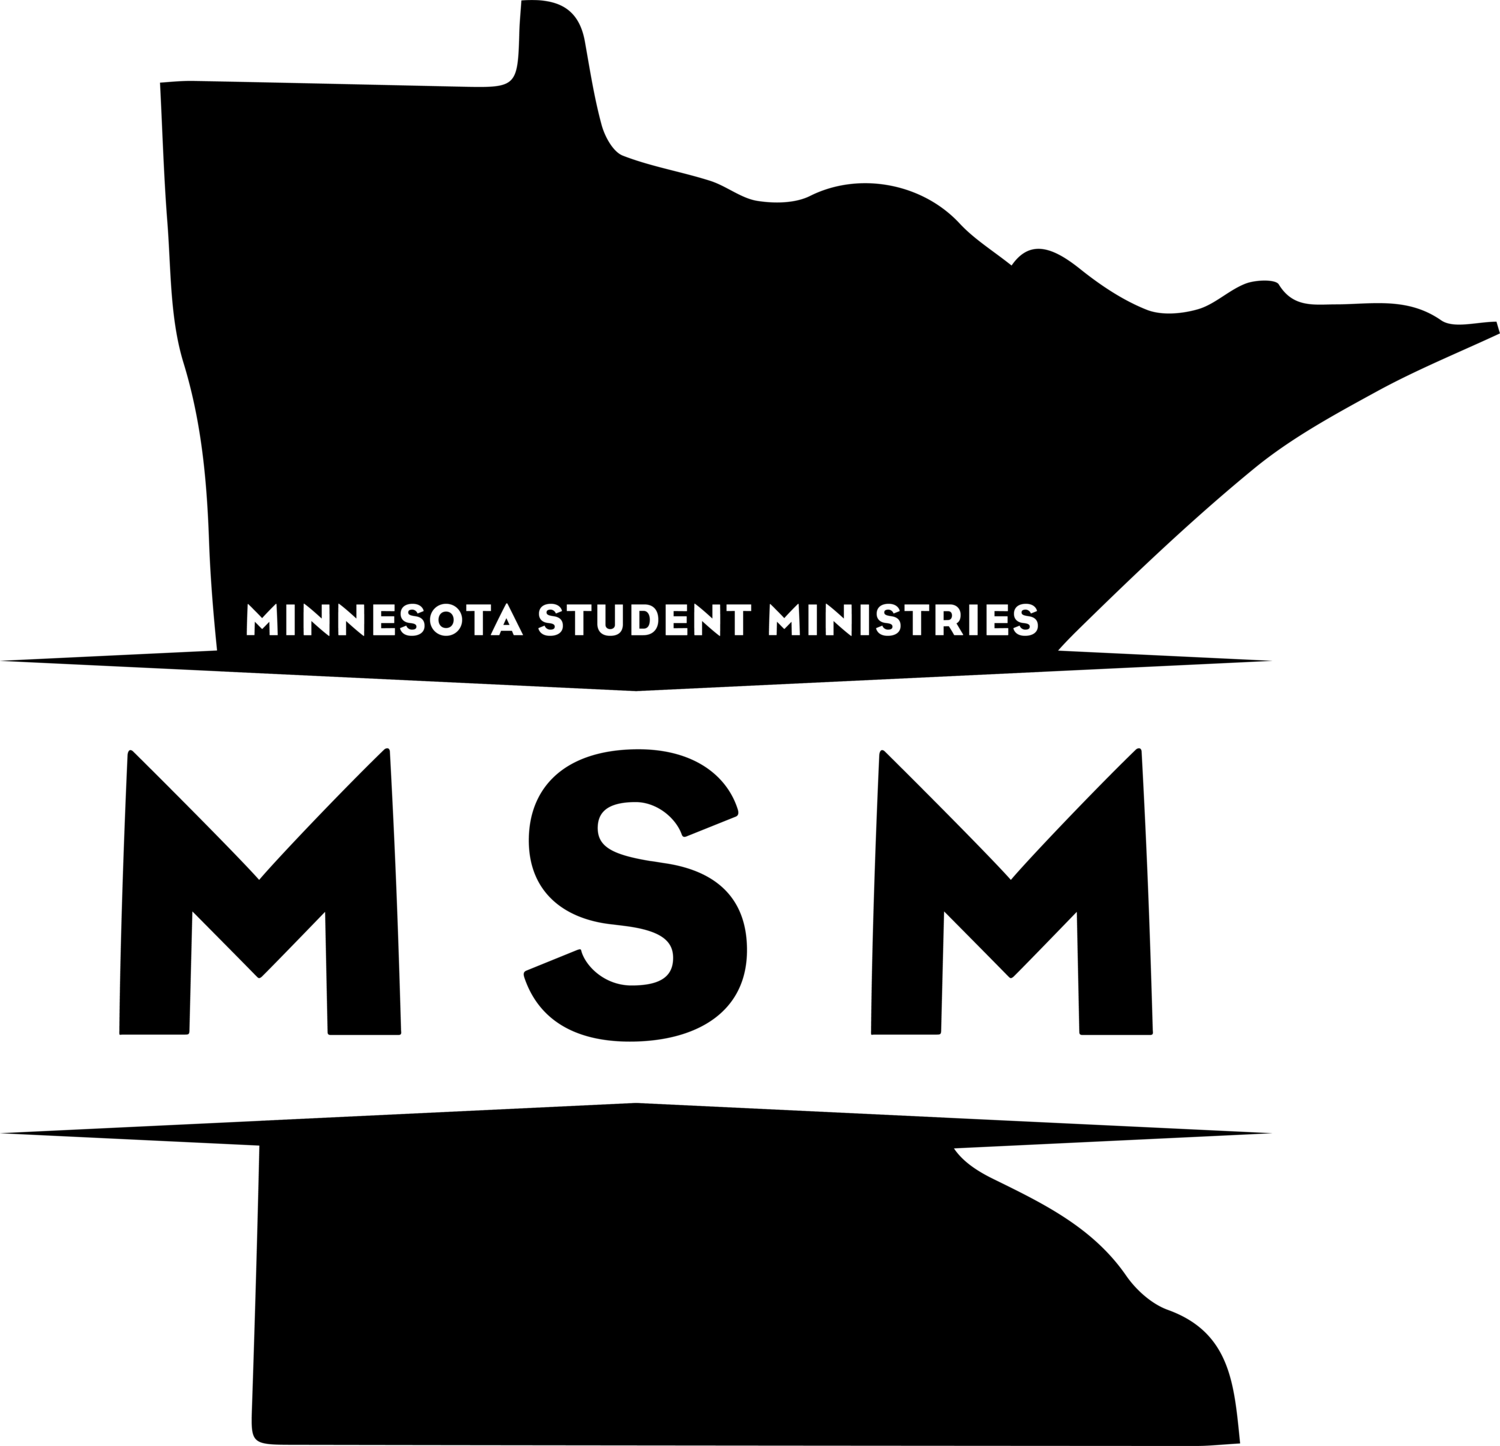 Minnesota Student Ministries